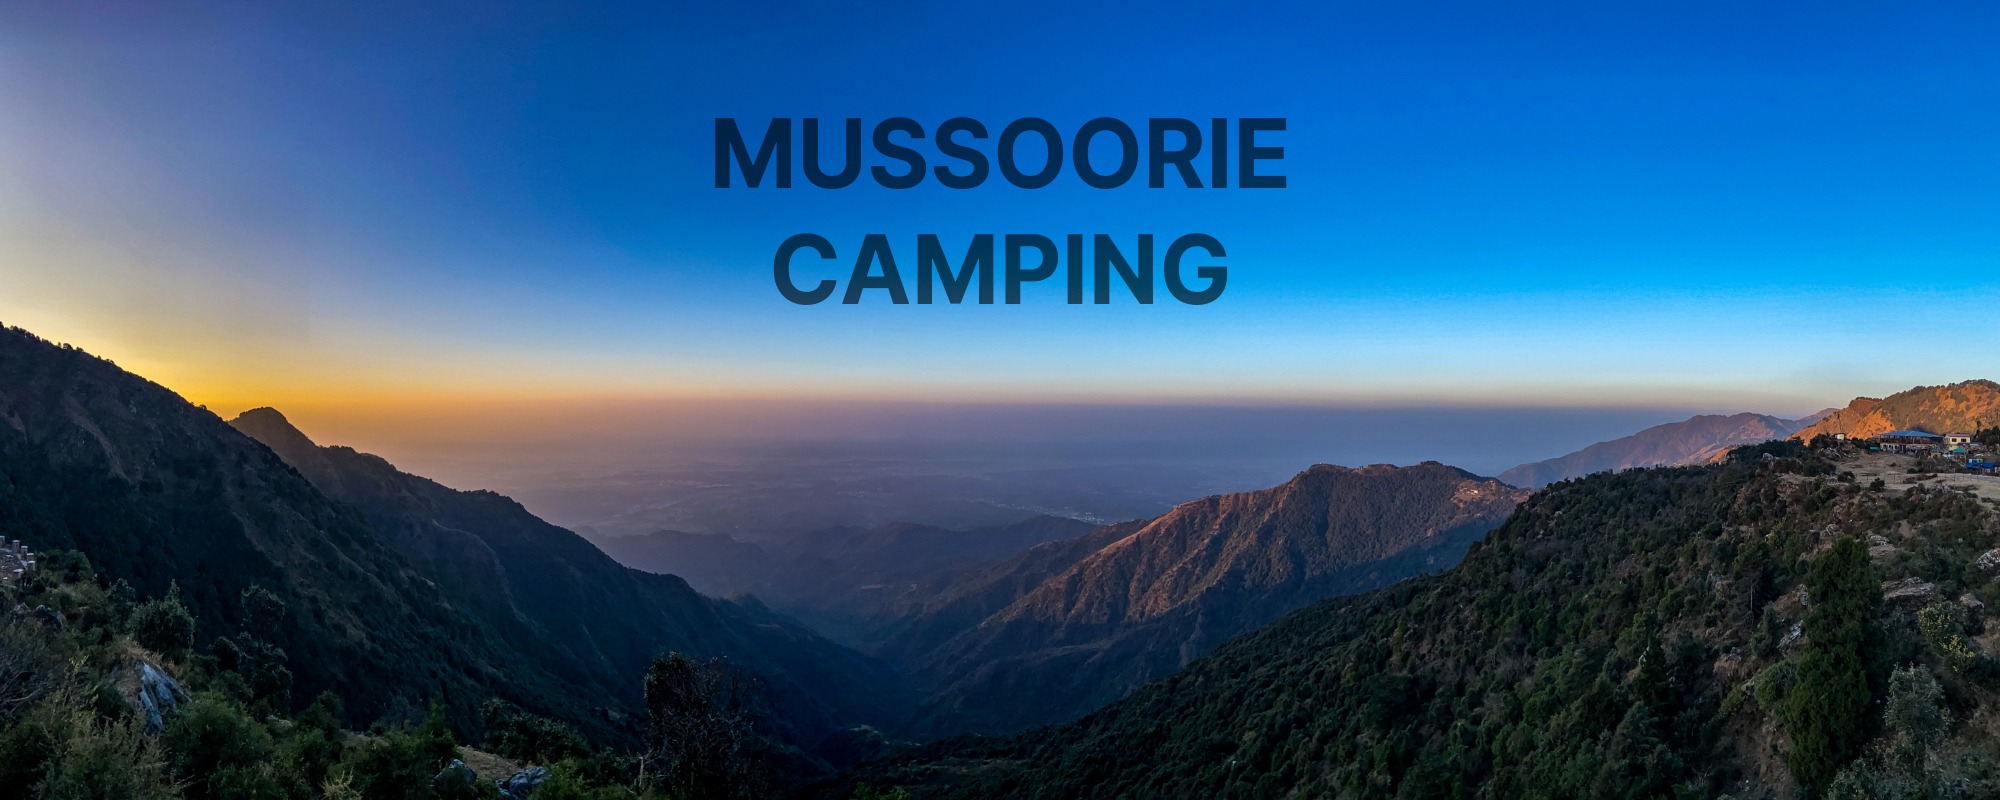 Mussoorie Camping